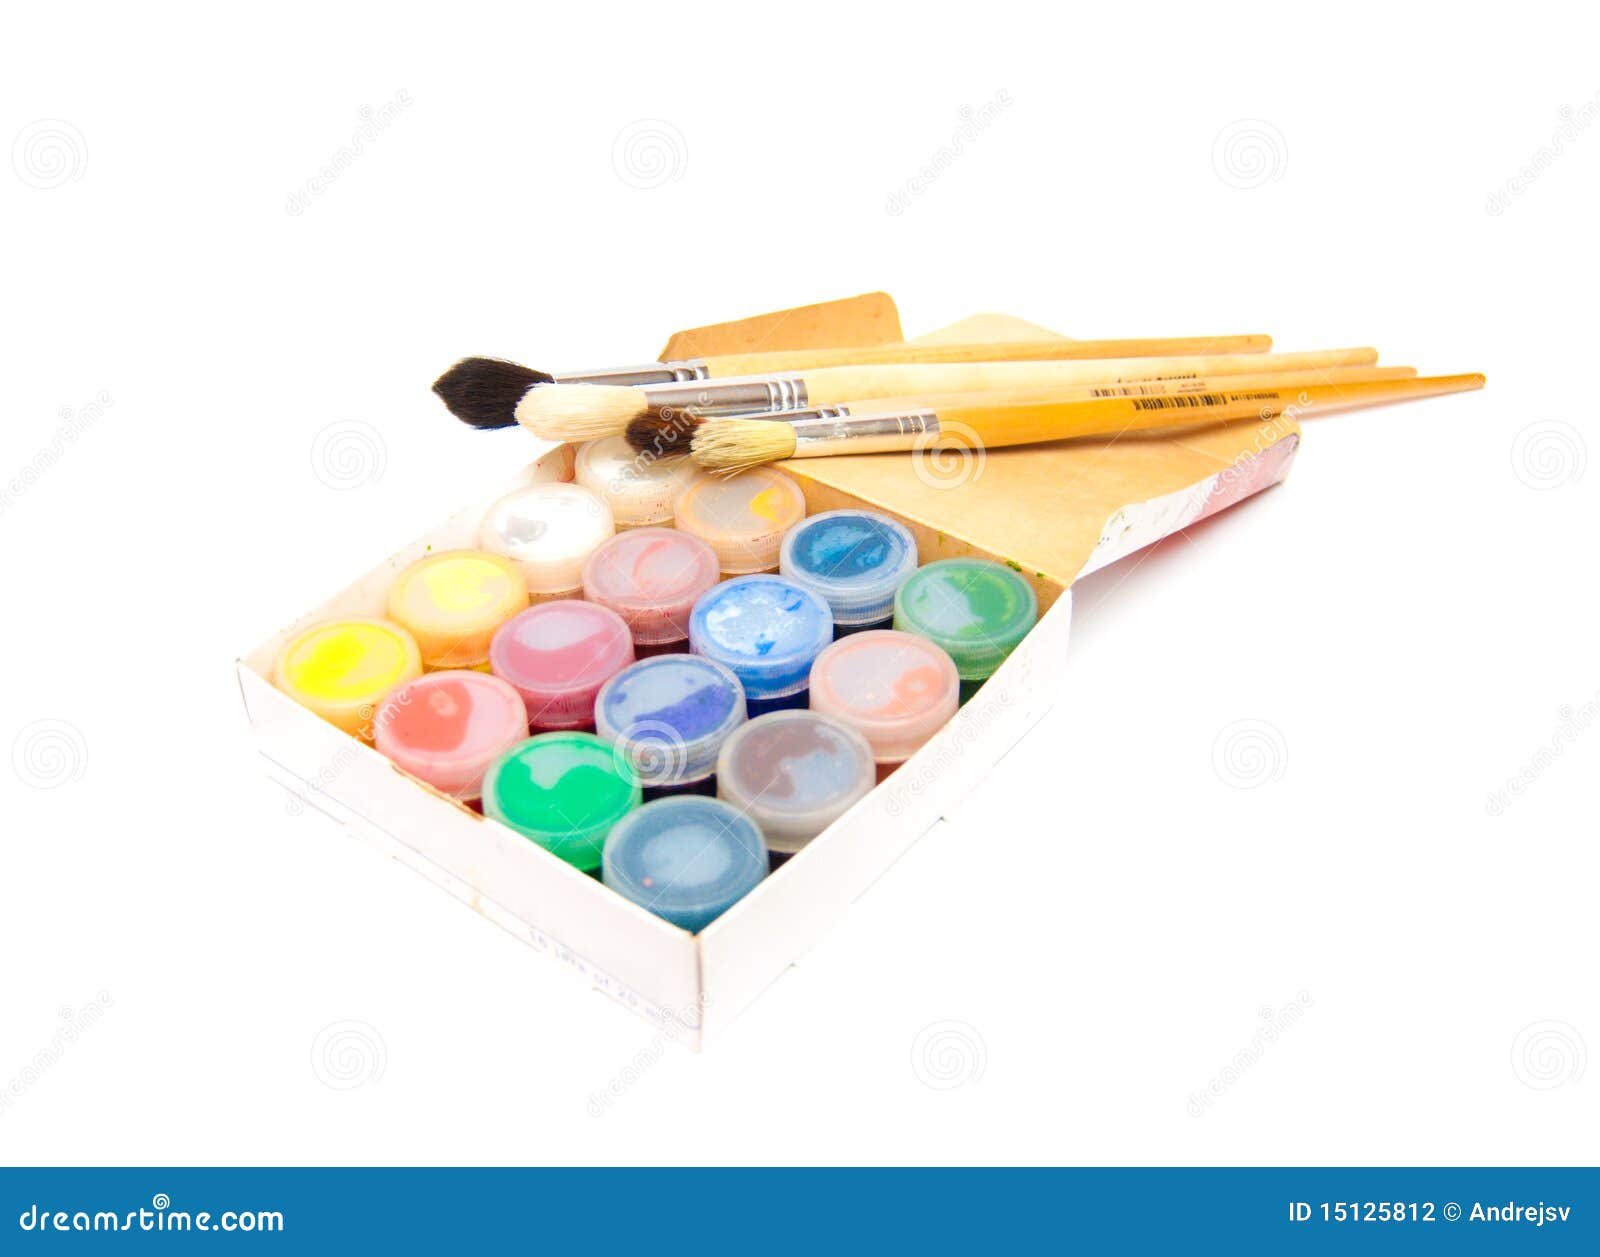 paintbrushes and dye